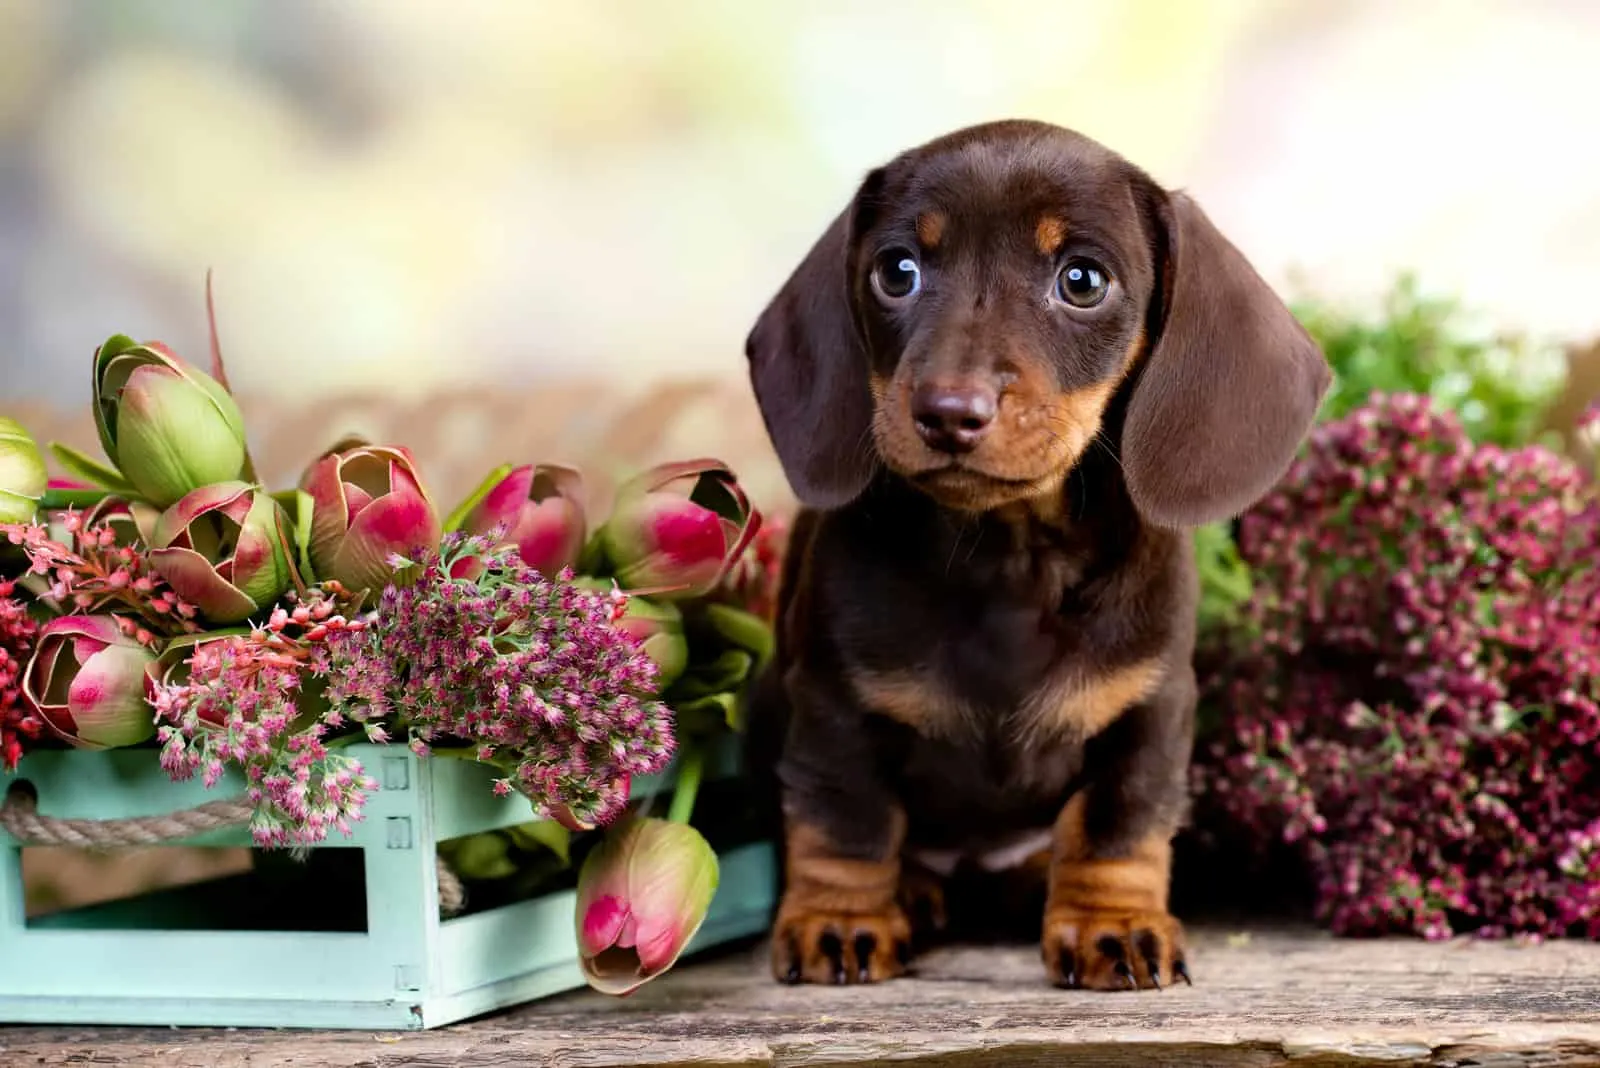 Dachshund puppy sitting by flowers